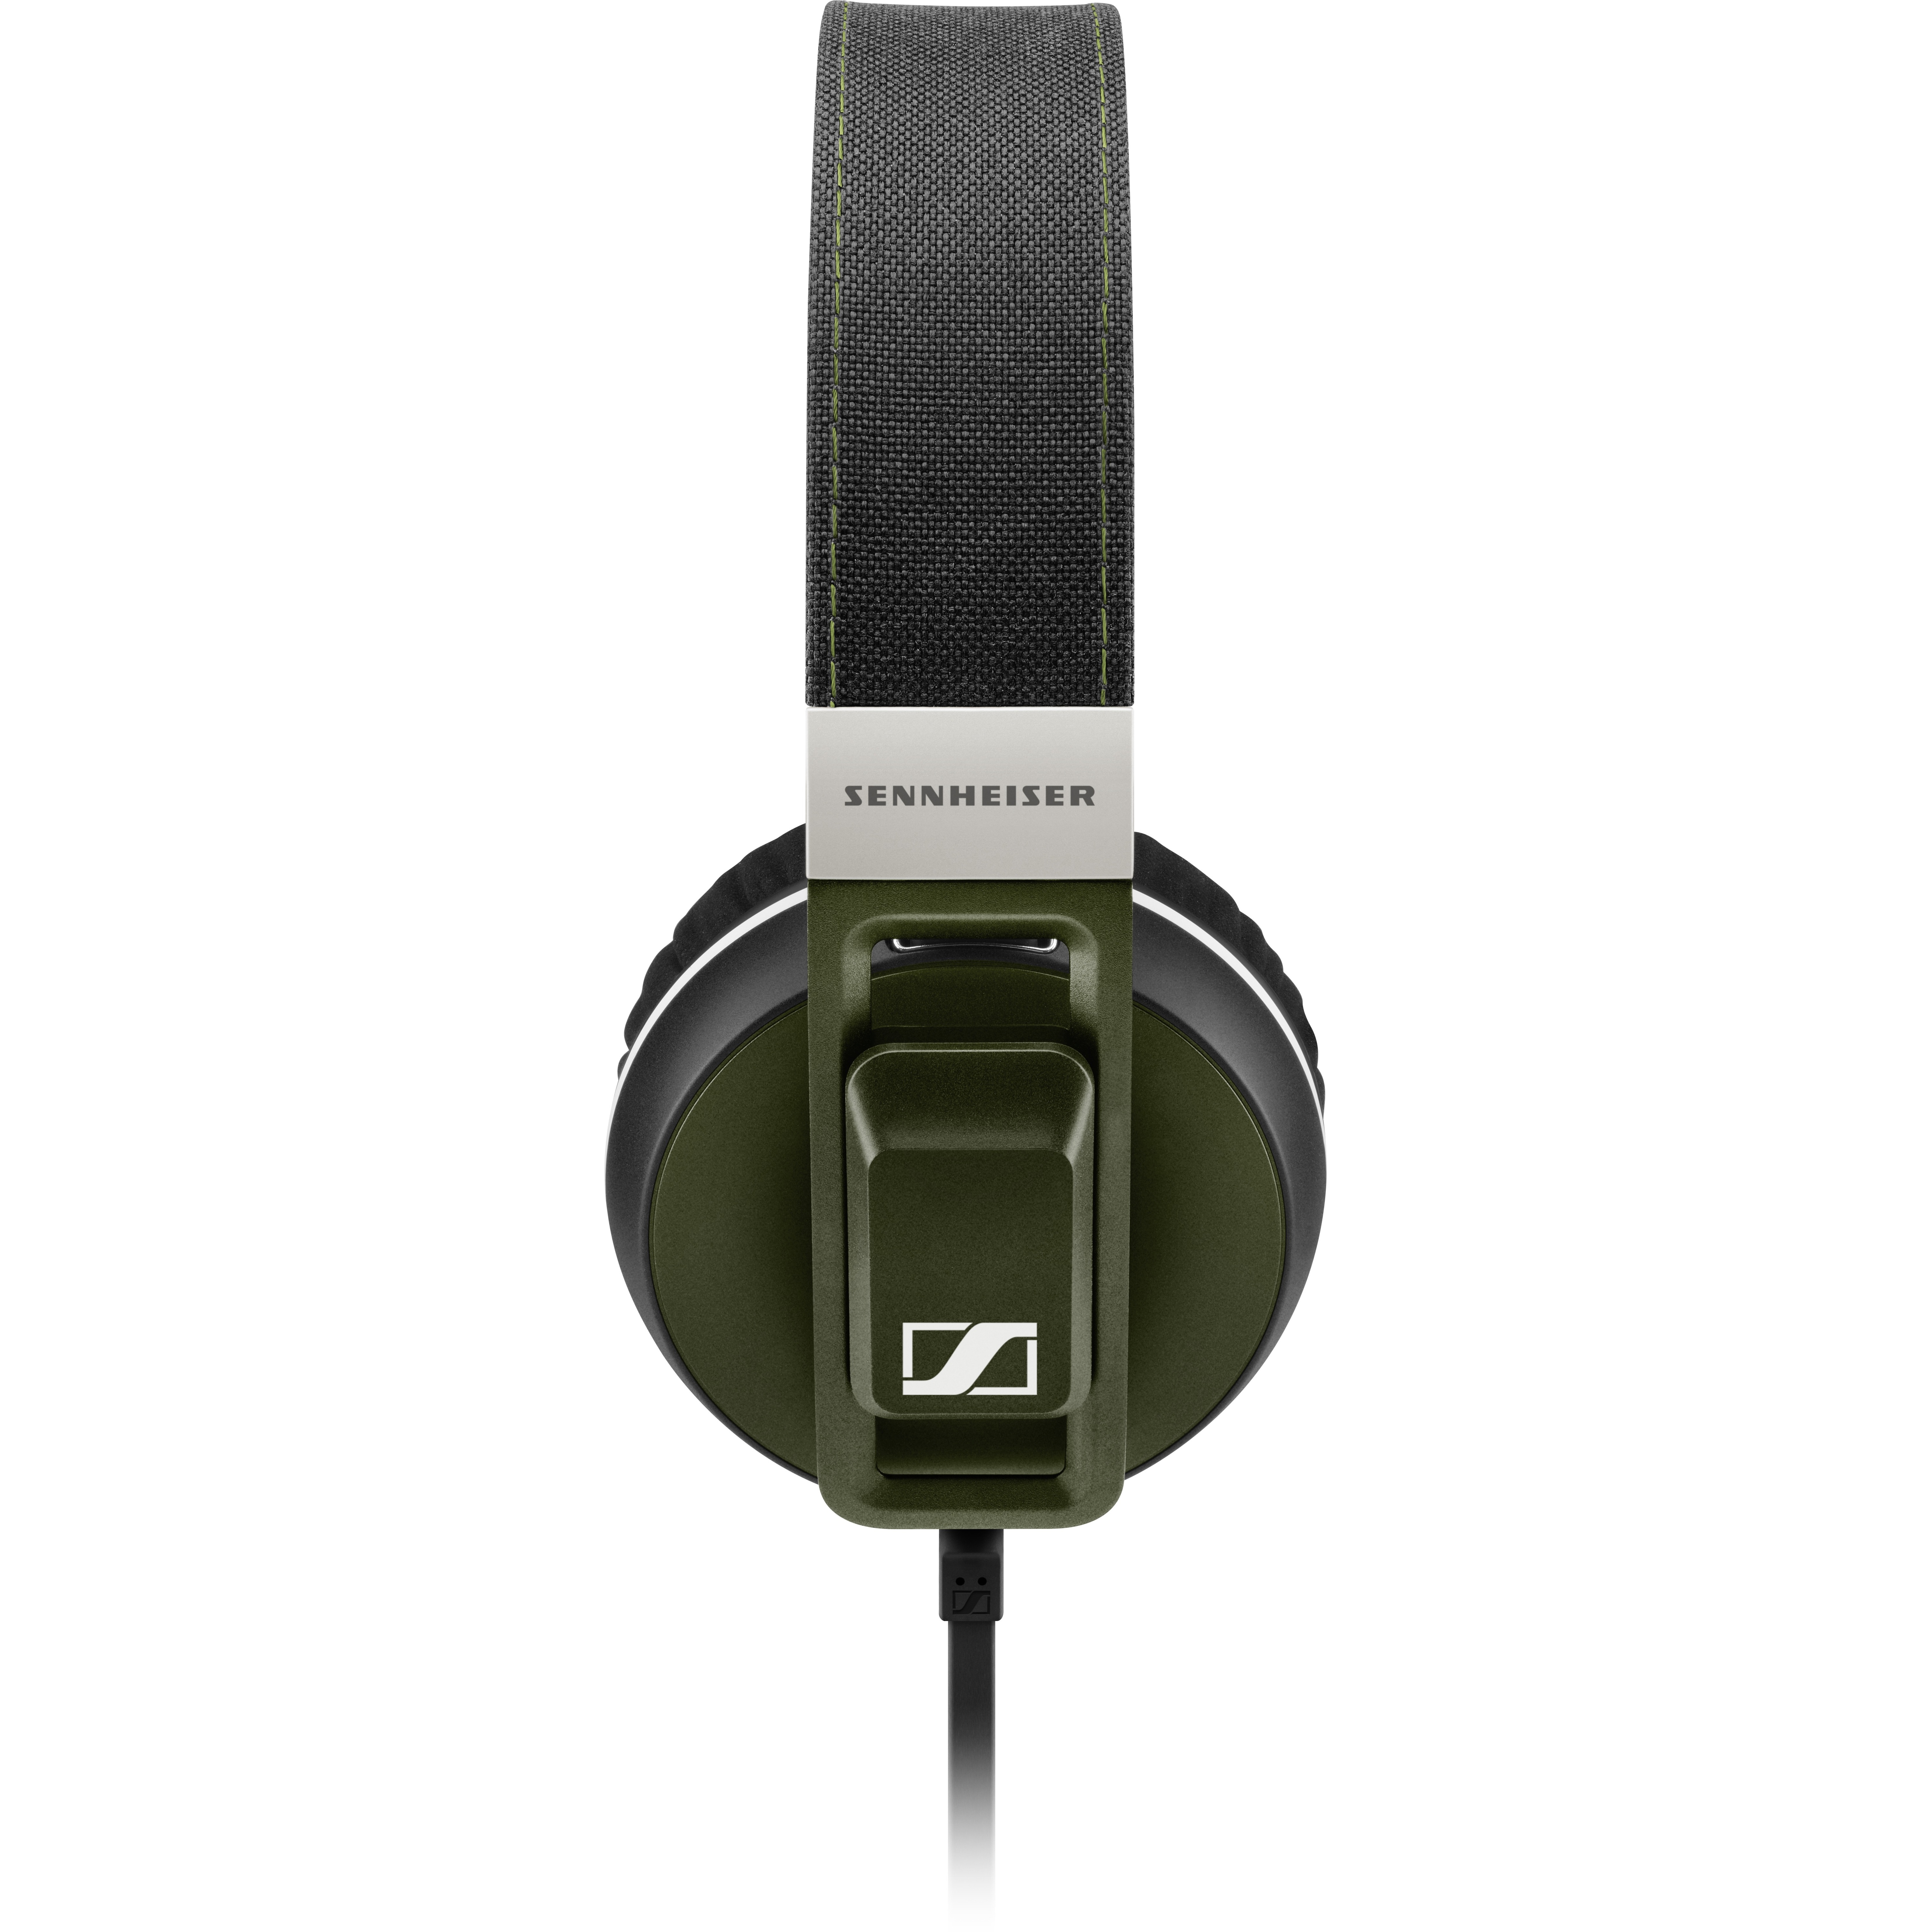 Sennheiser Headphones URBANITE XL - image 2 of 4